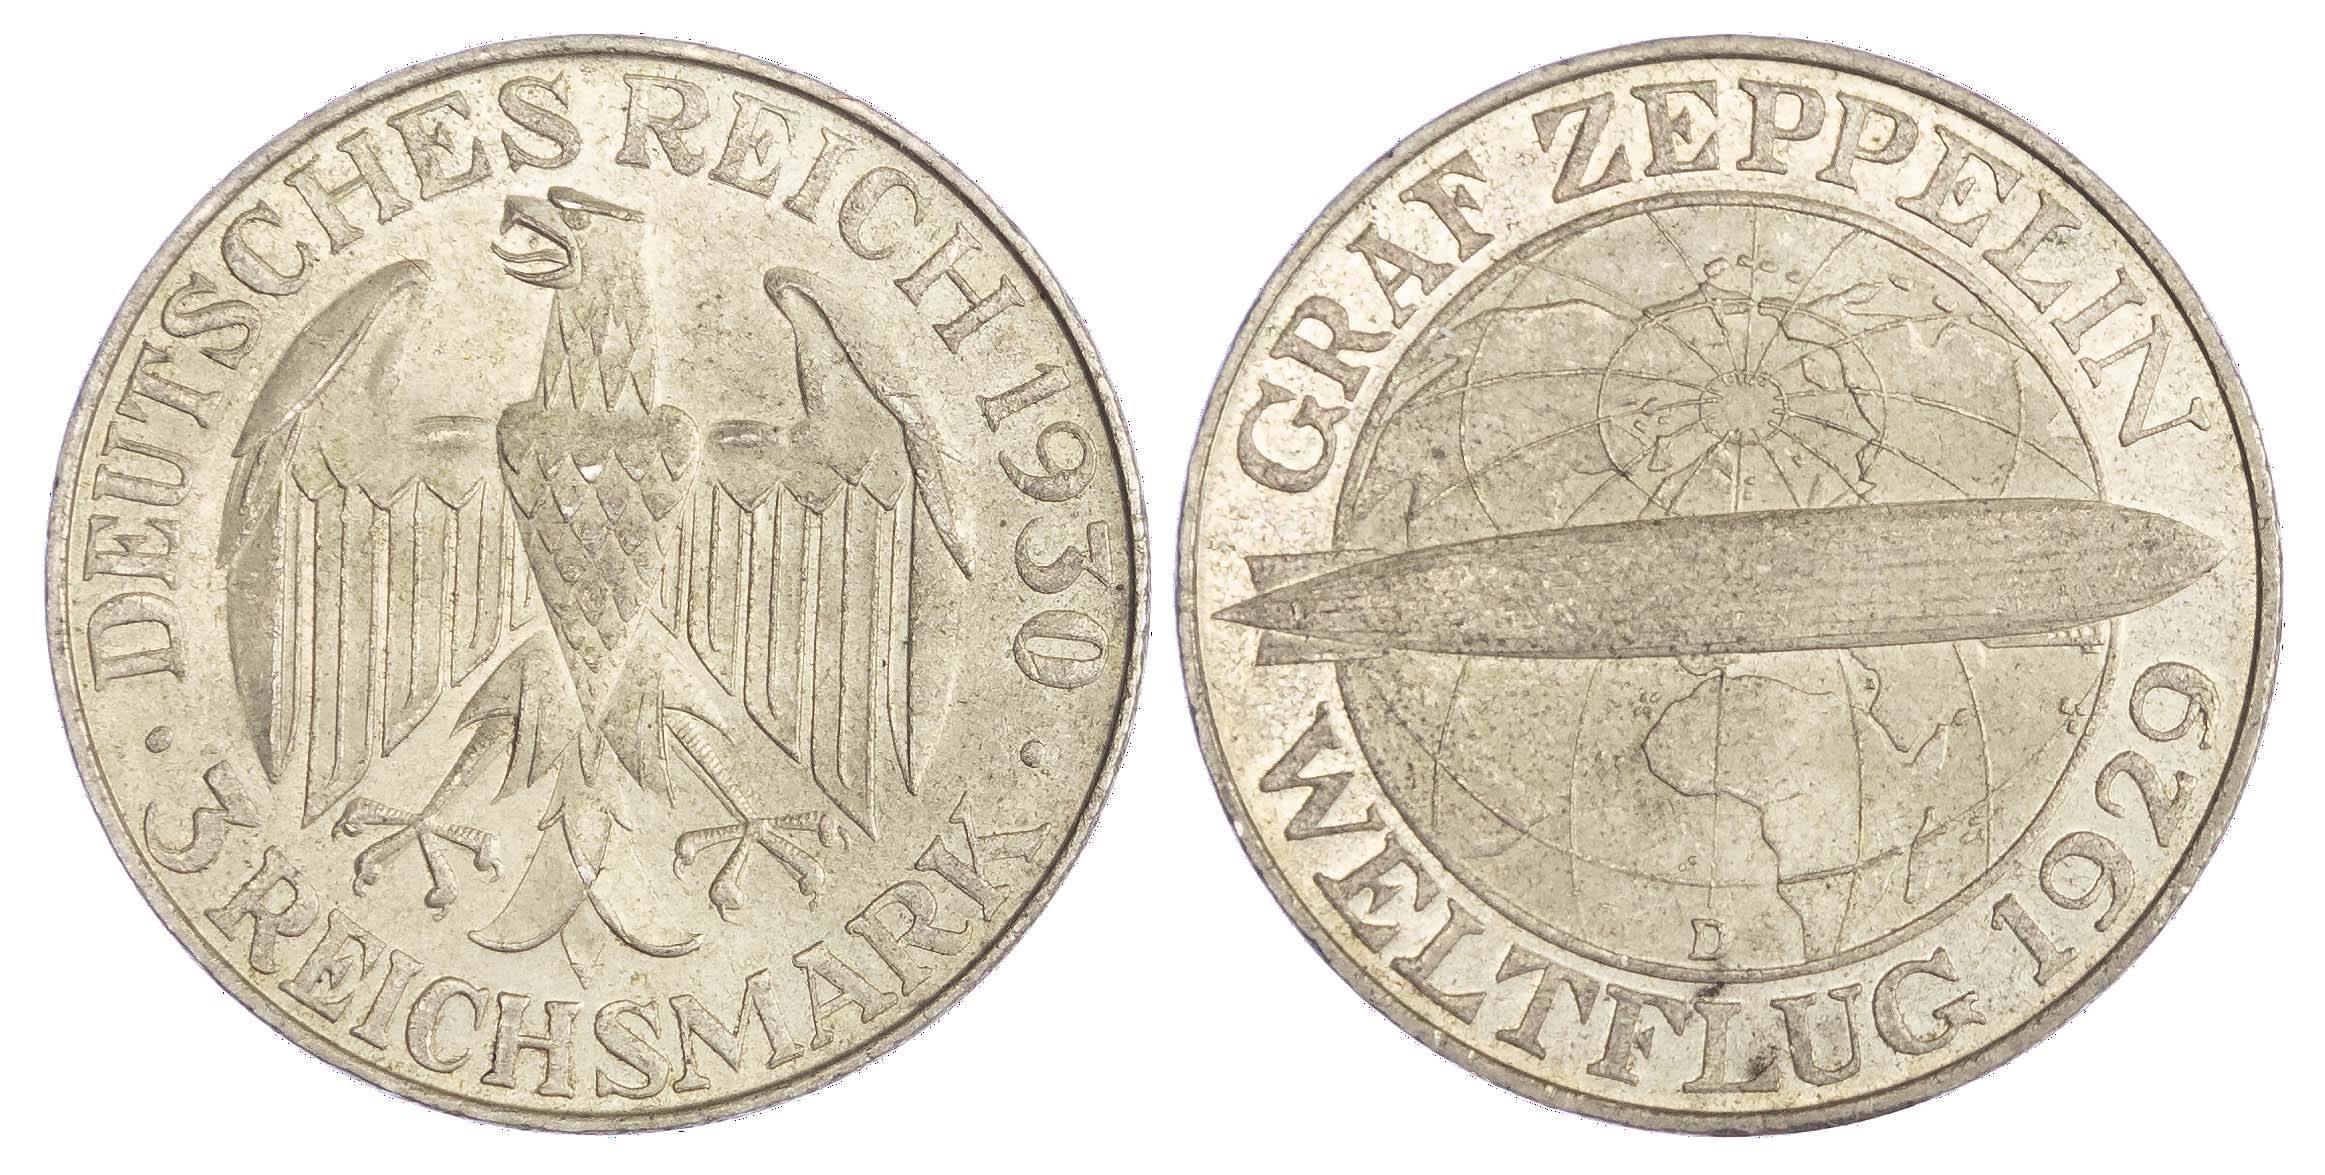 Germany, Weimar Republic (1923-33), silver 3 Reichsmark, 1930-D - Zeppelin